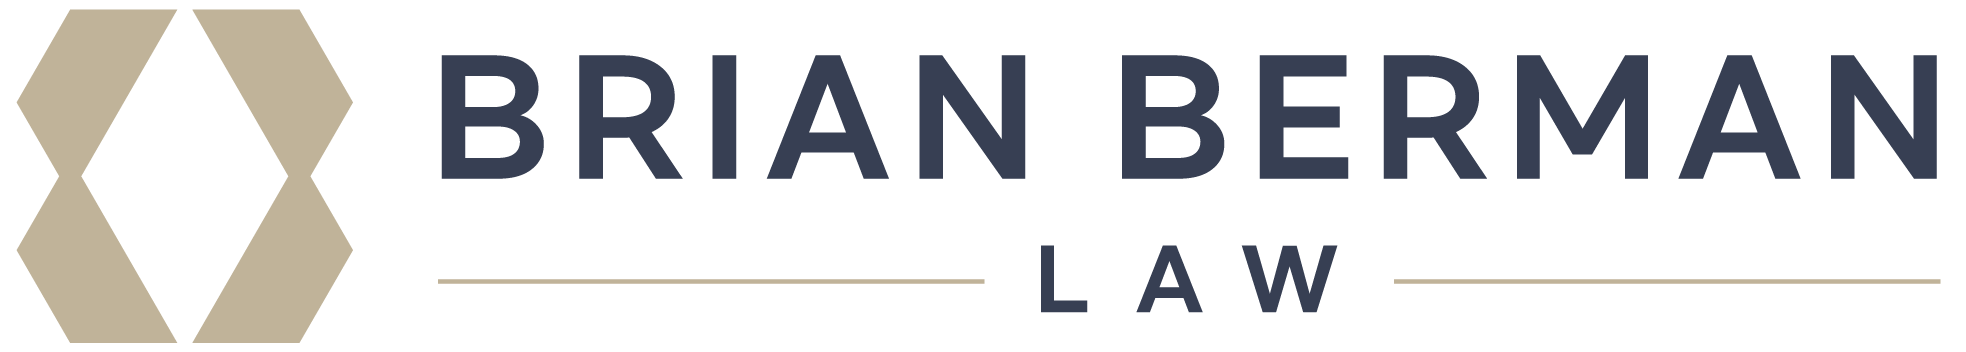 Brian Berman Law Logo